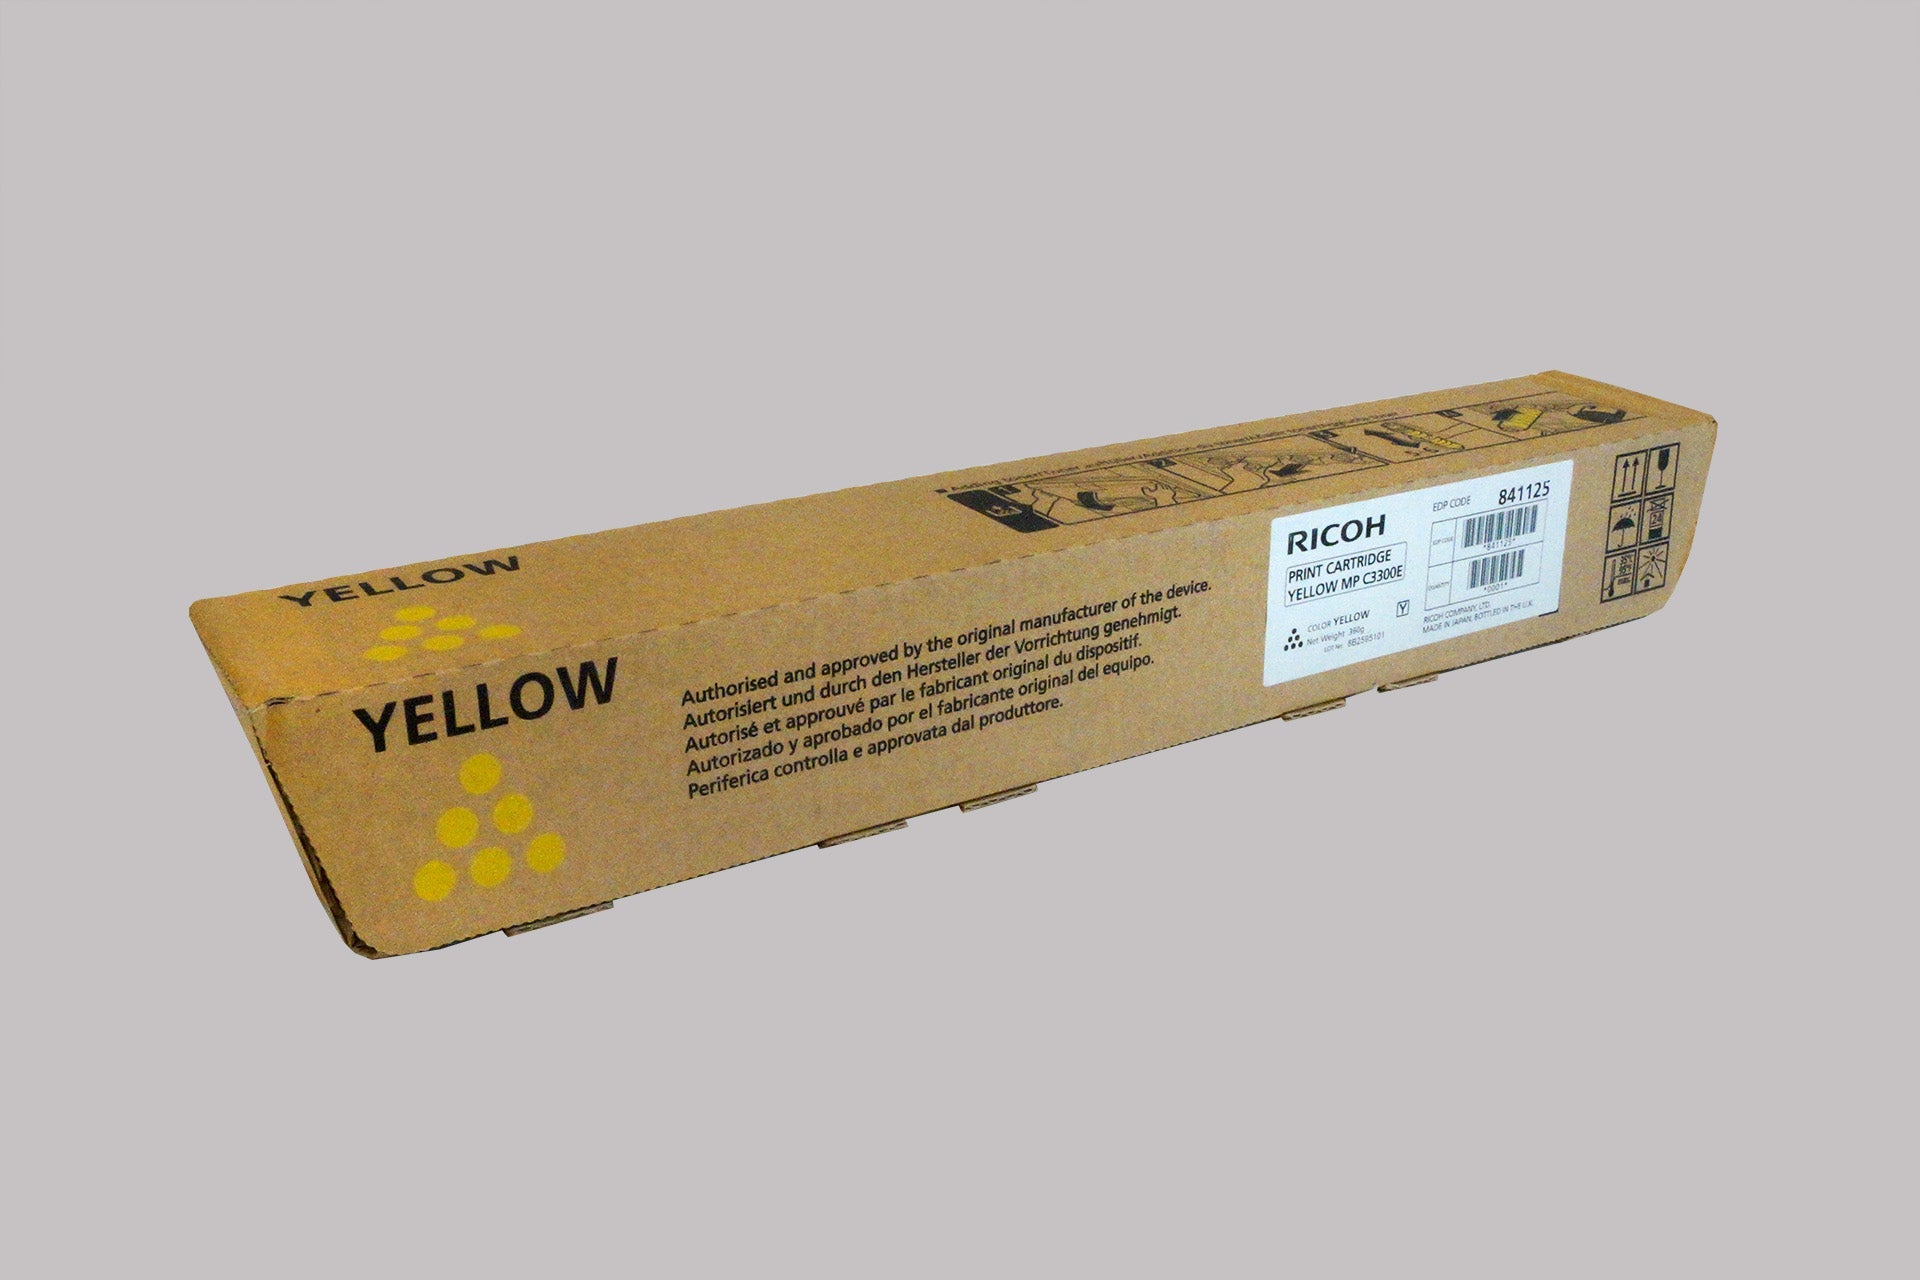 Print Cartridge 841125 Yellow